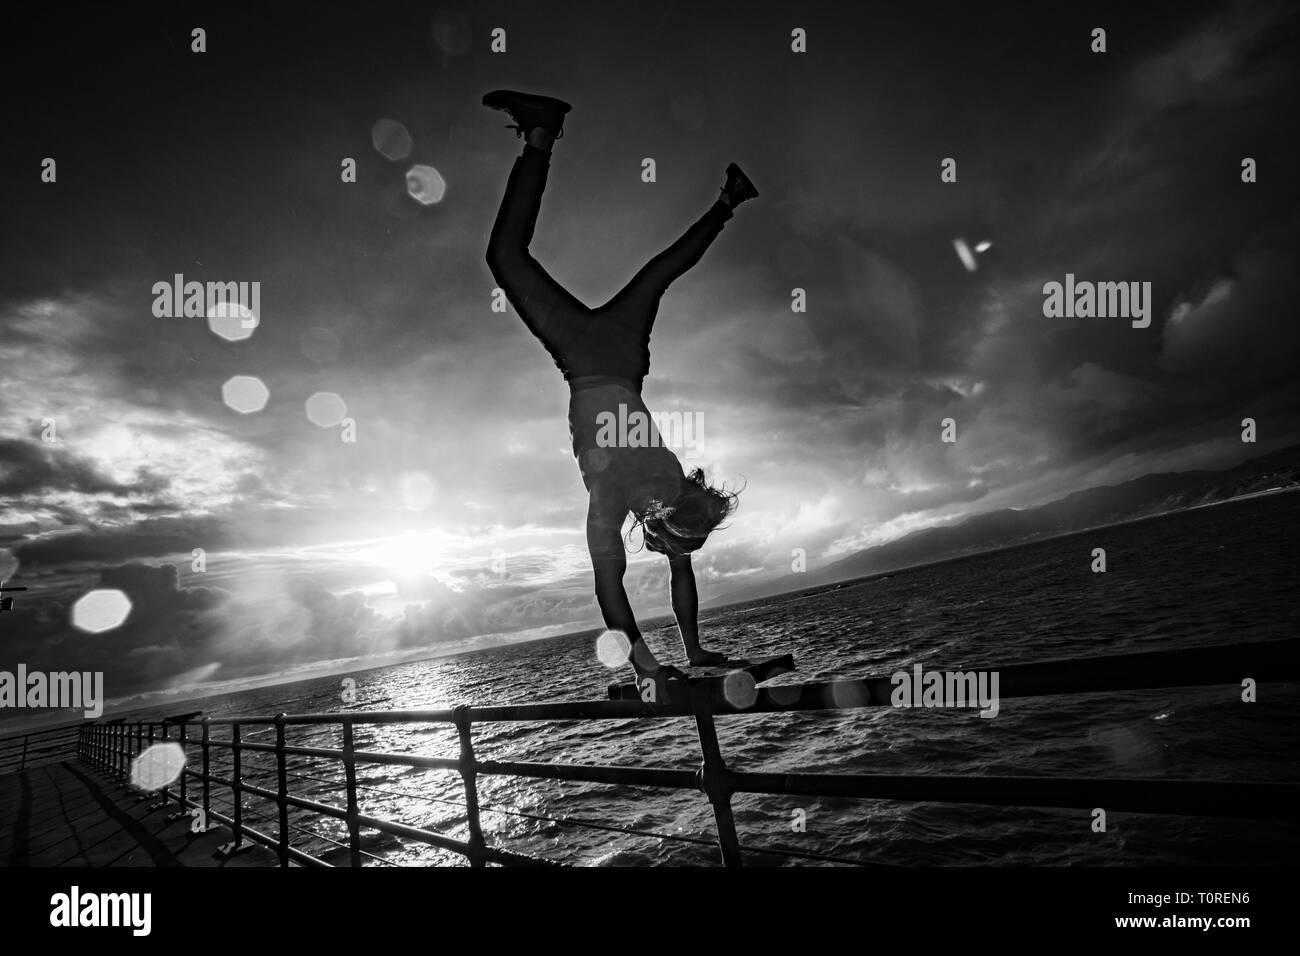 Stuntman /athlete Kane Serafin at the Pier, Santa Monica, Los Angeles, California, USA Stock Photo